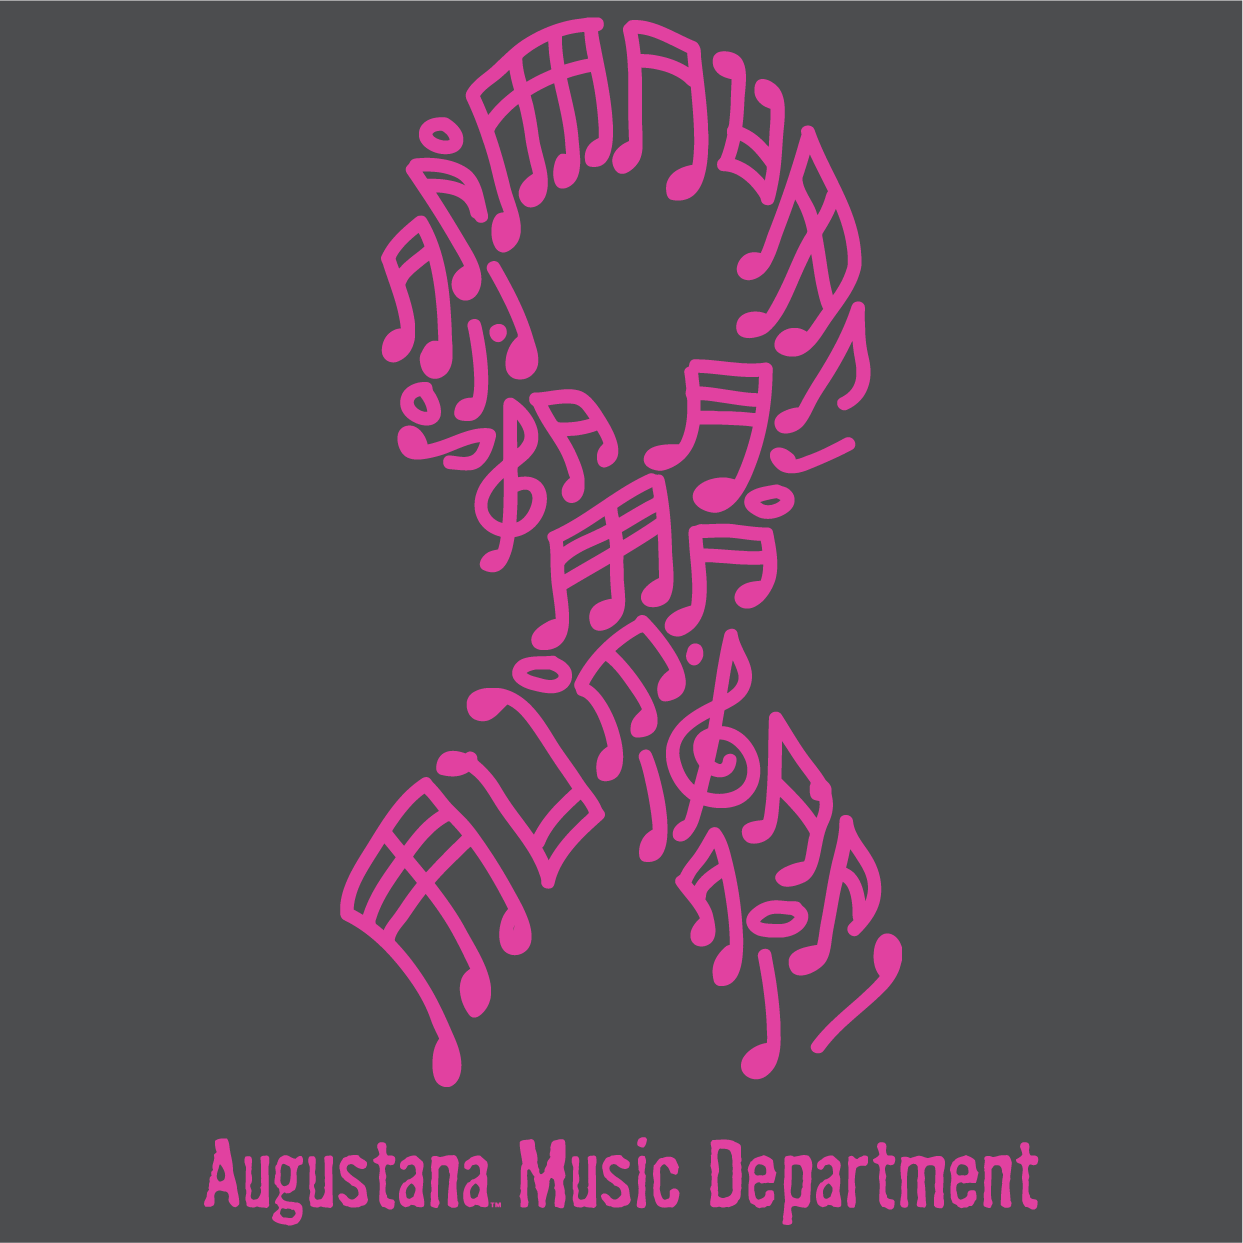 Augustana Music Department Breast Cancer Awareness shirt design - zoomed